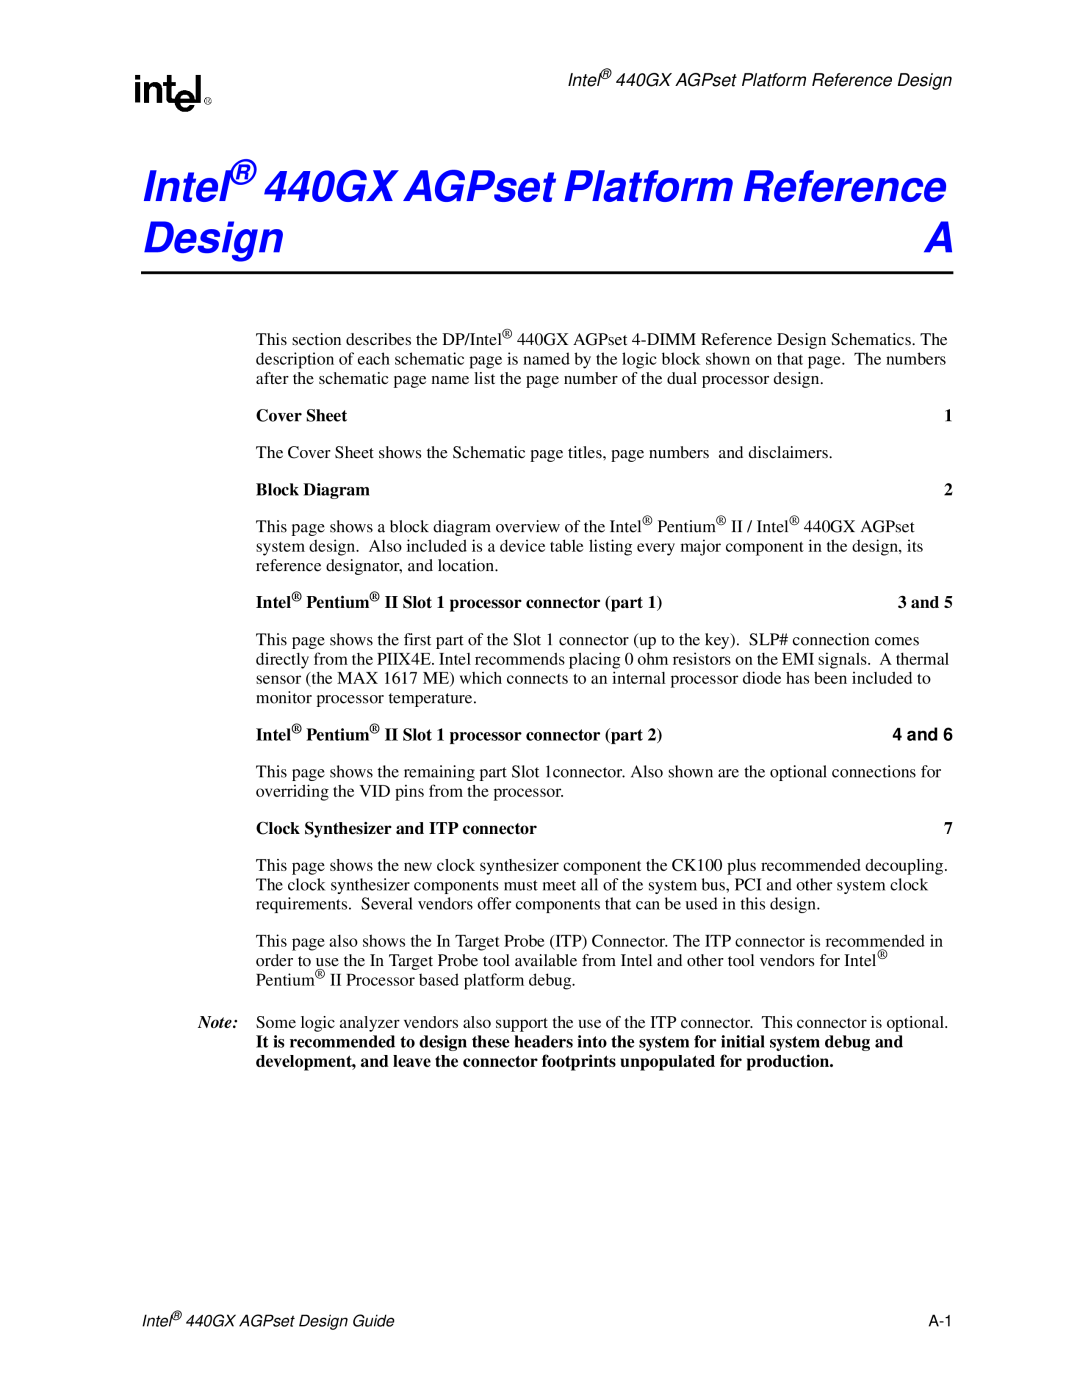 Intel manual Intel 440GX AGPset Platform Reference, Intel440GX AGPset Platform Reference Design, 4 and 